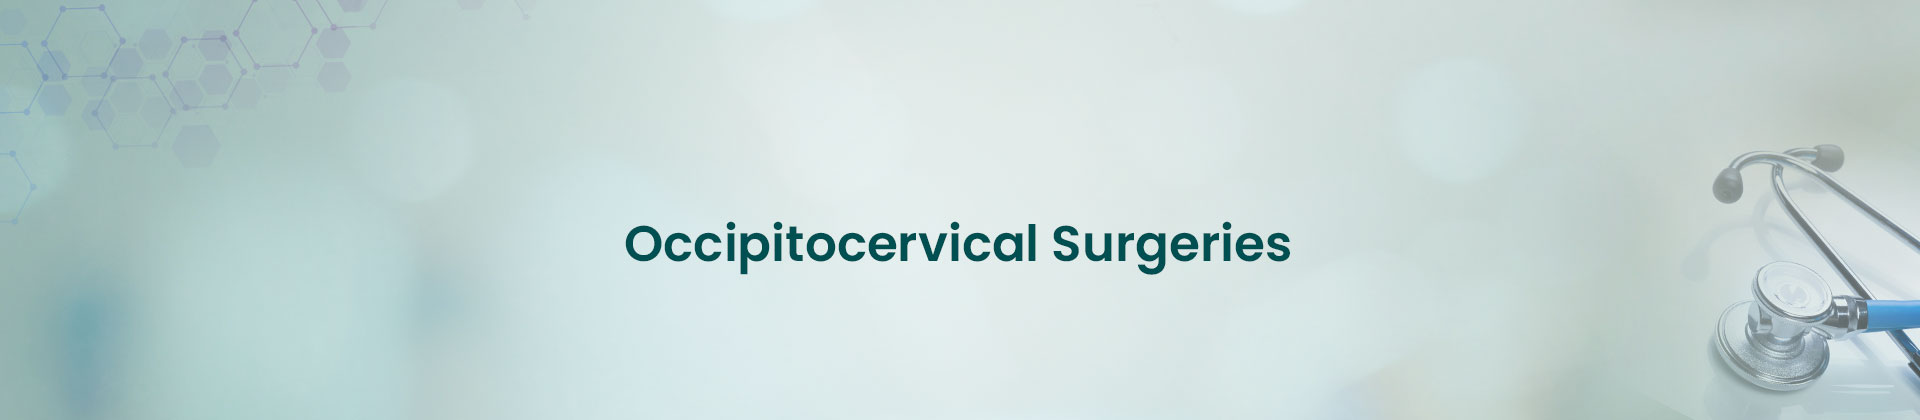 Occipitocervical Surgeries